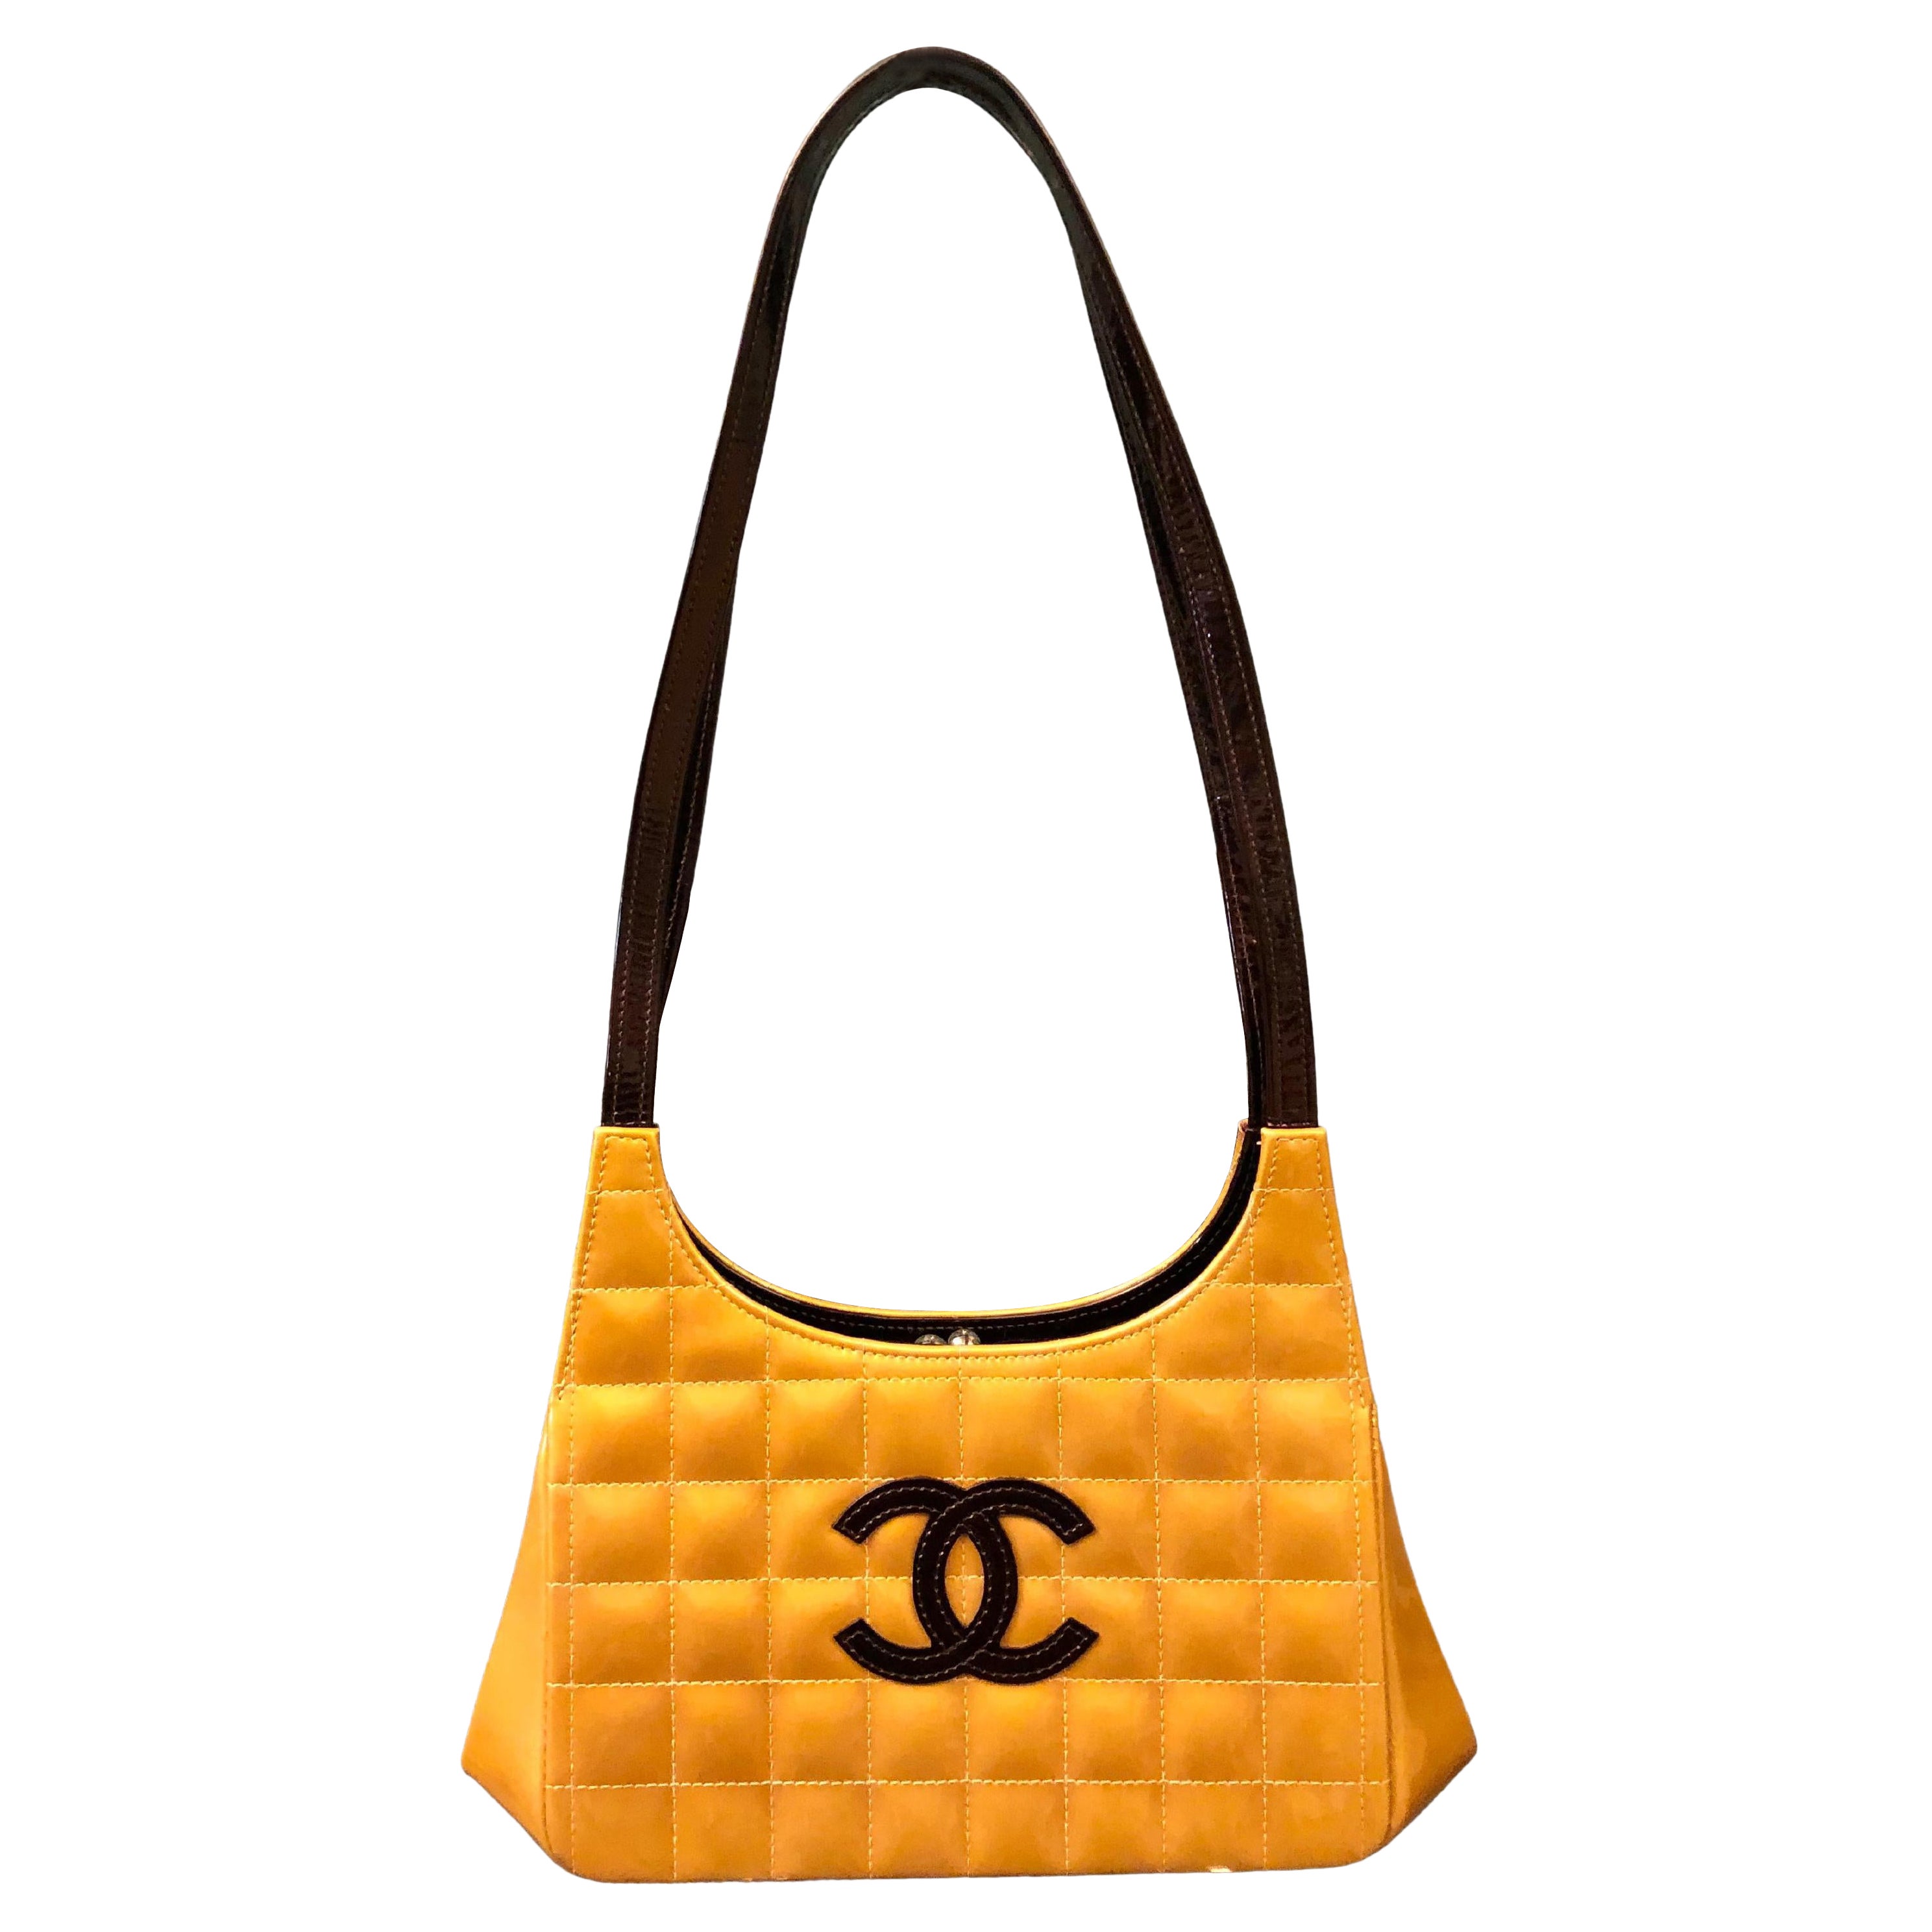 Chanel Yellow Patent “CC” Handbag 